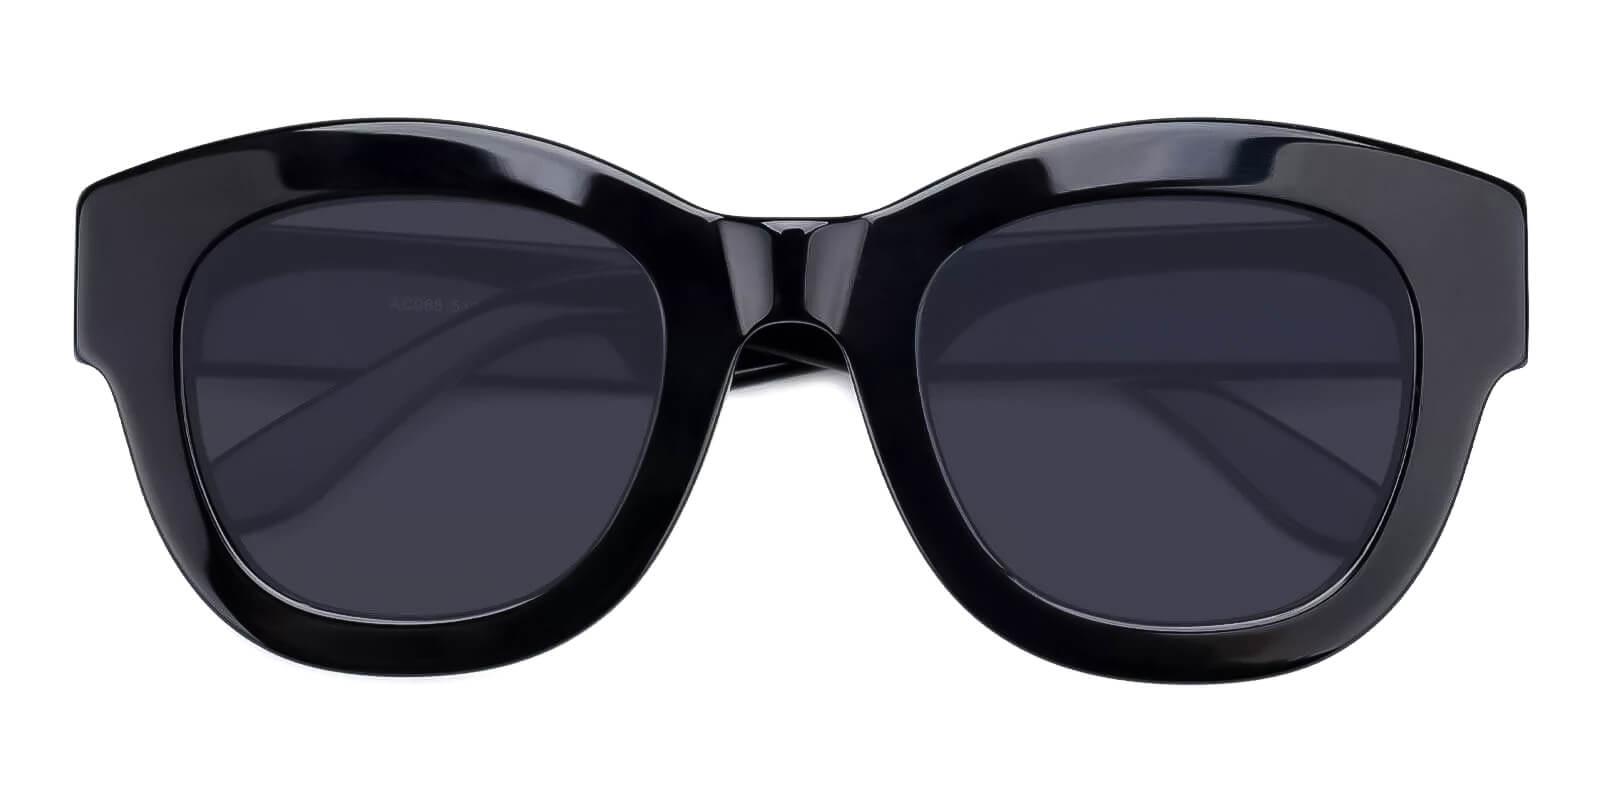 Meridian Black Acetate Fashion , Sunglasses , UniversalBridgeFit Frames from ABBE Glasses